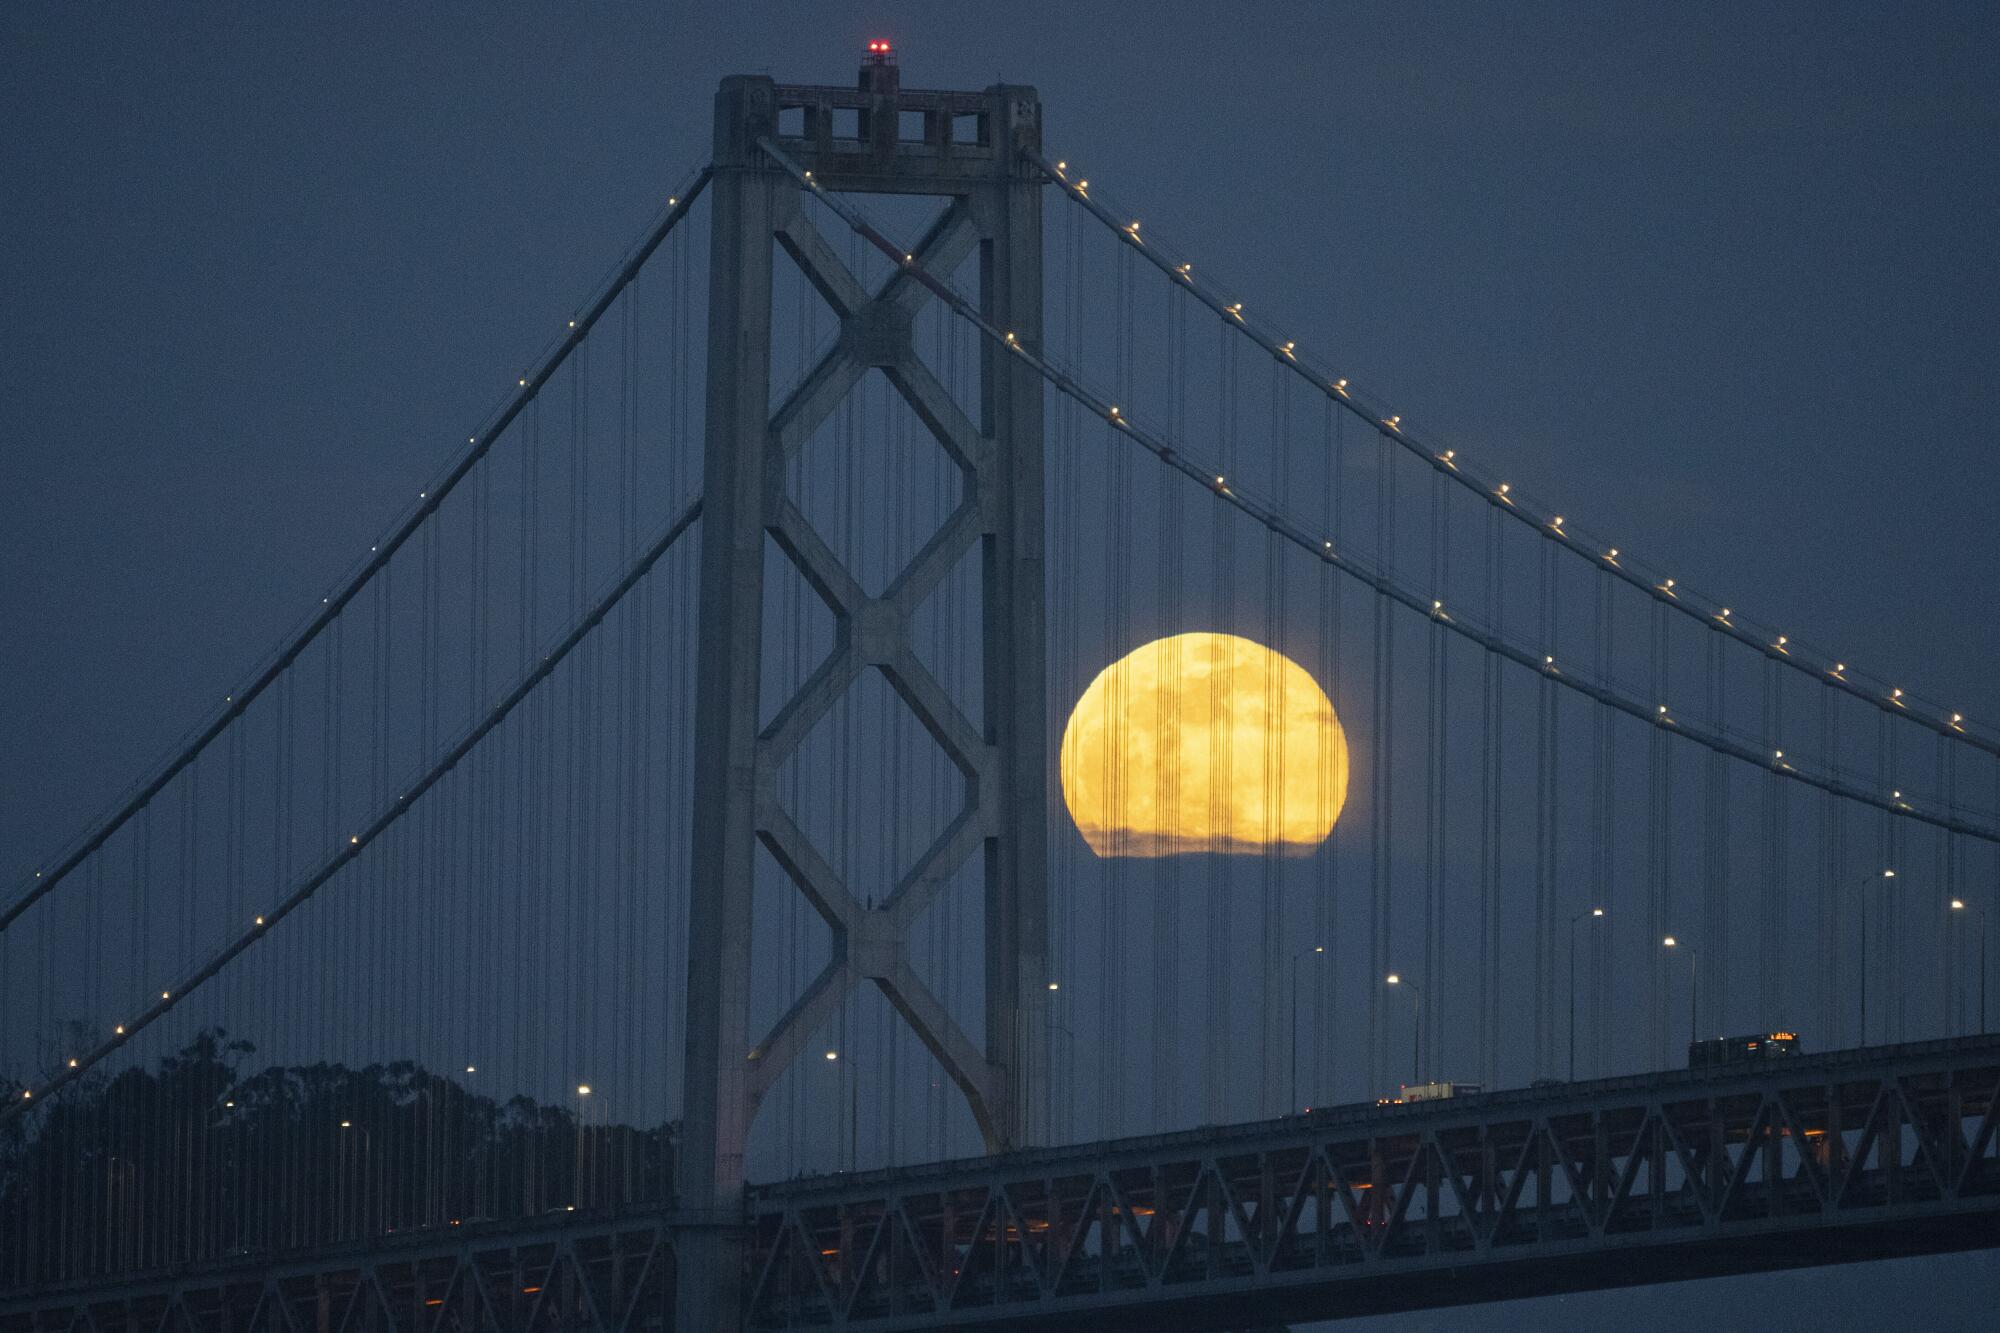 In January, a full moon rises over the San Francisco-Oakland Bay Bridge.